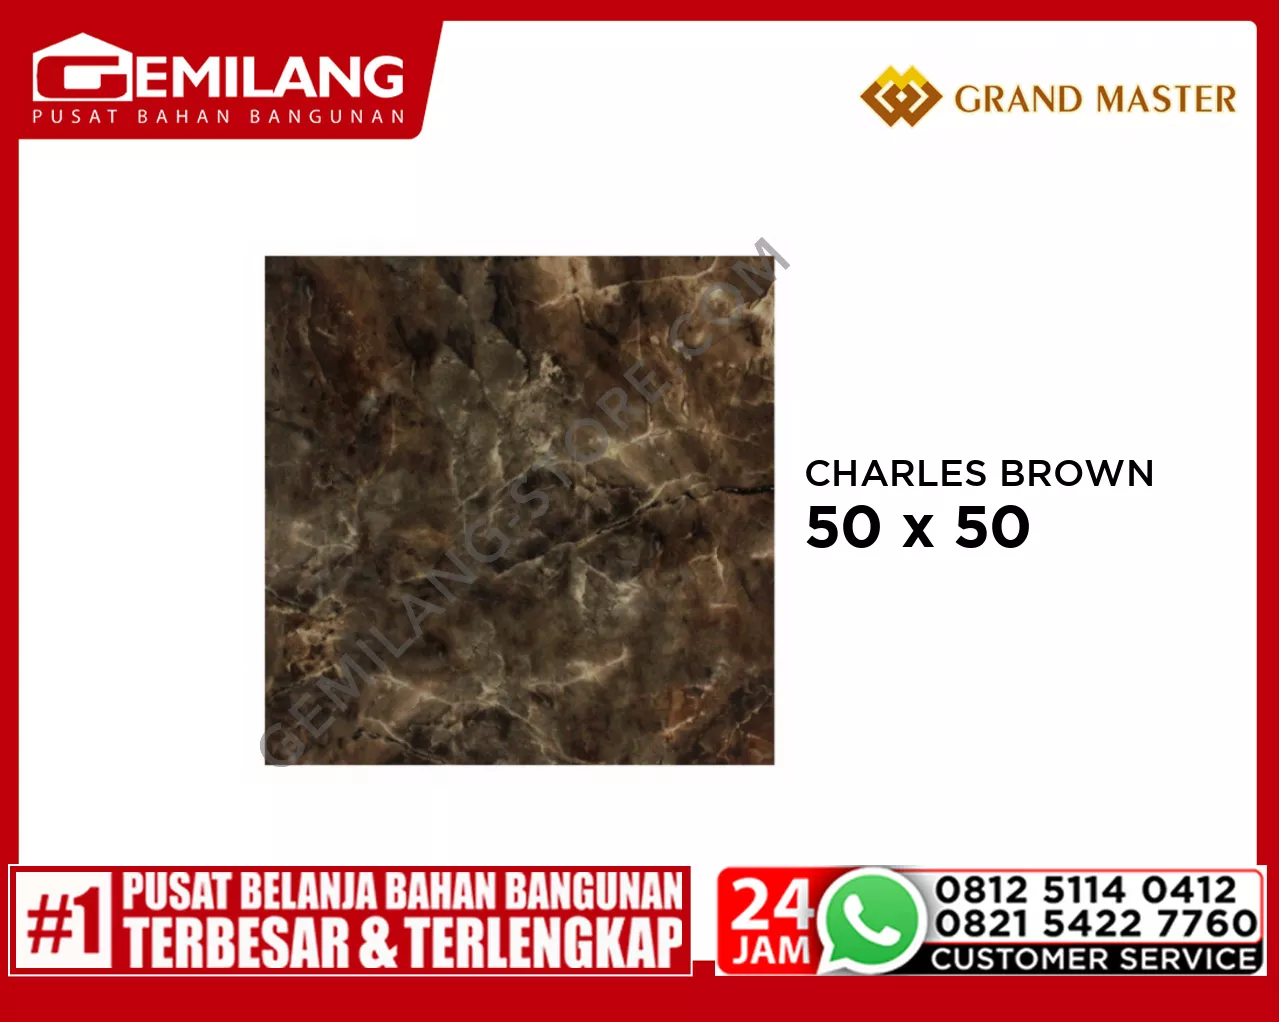 GRAND MASTER CHARLES BROWN 50 x 50